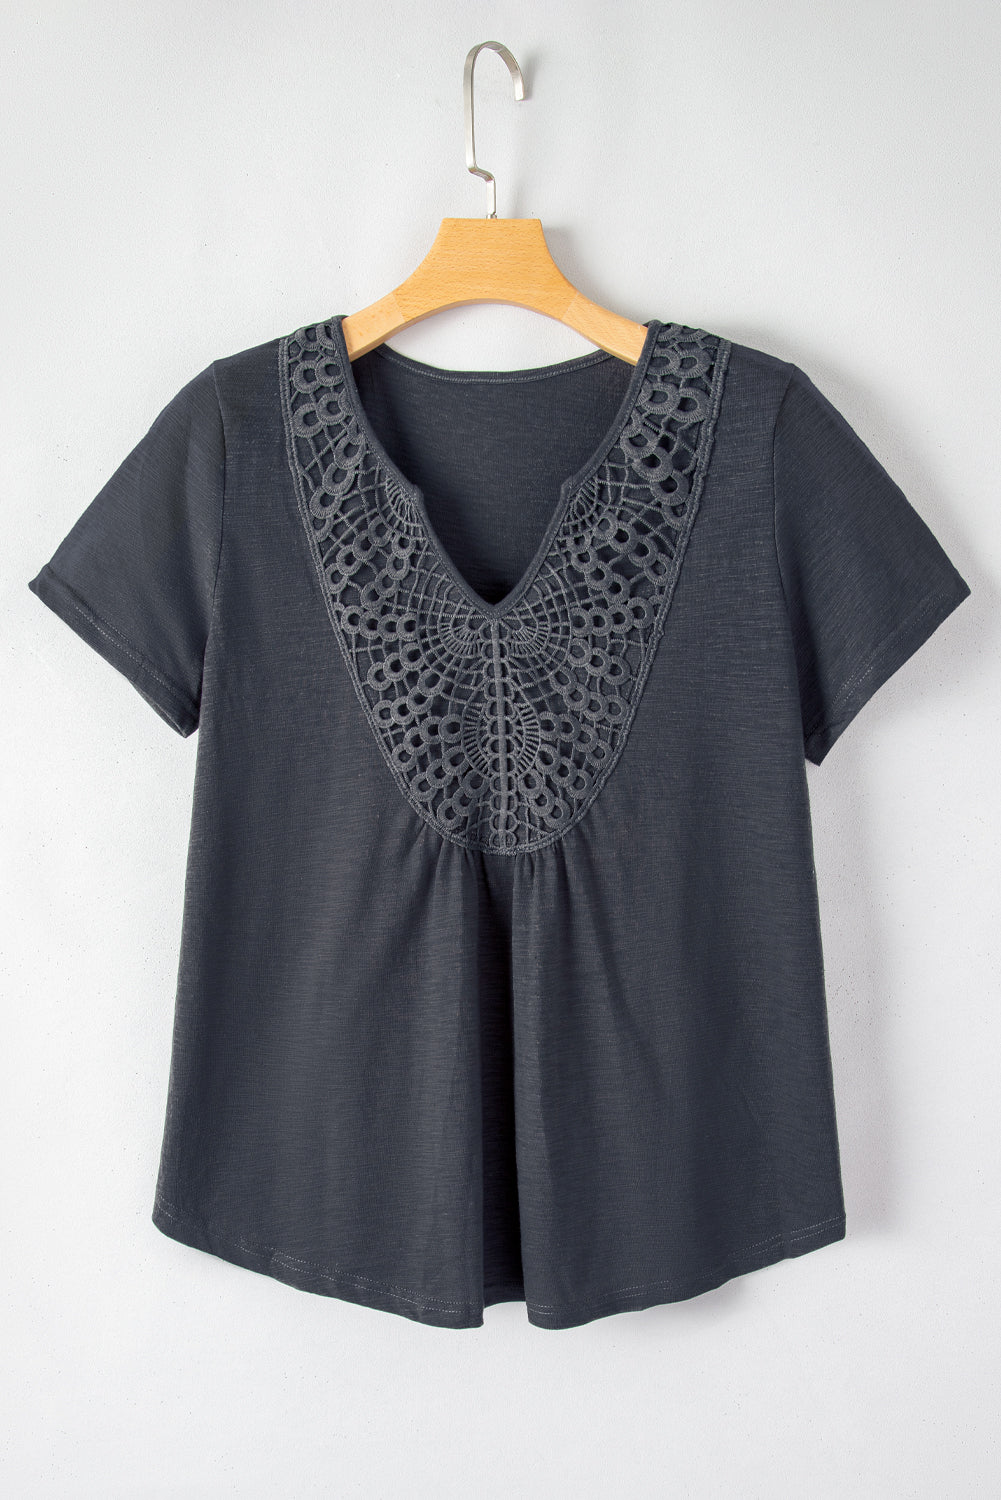 Gray Lace Crochet Patchwork V Neck T Shirt